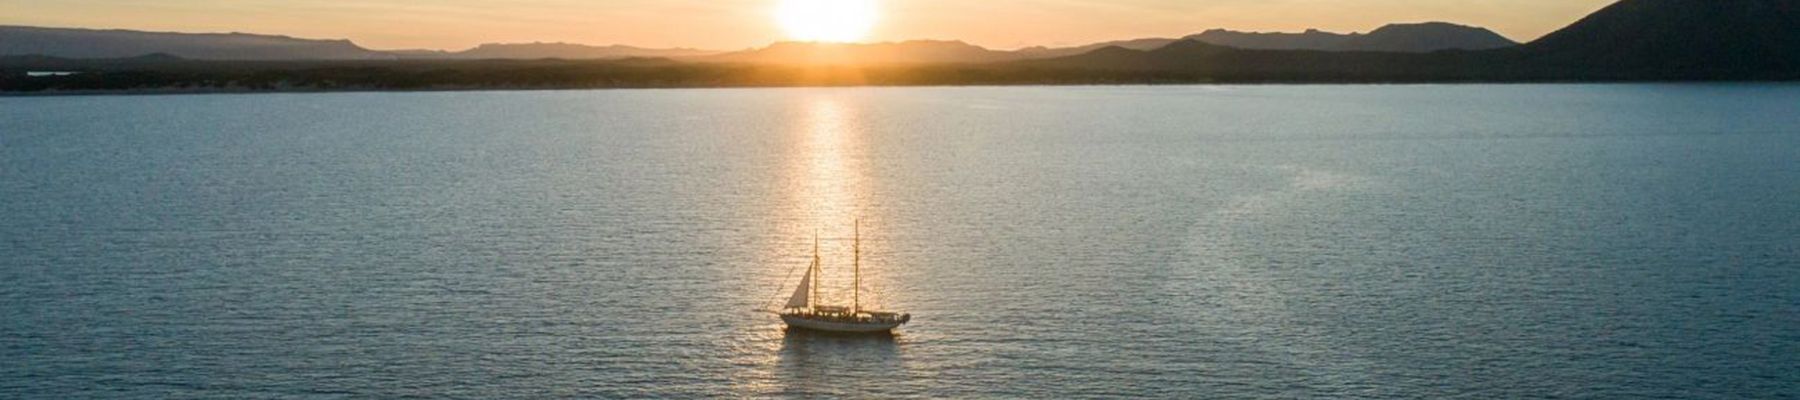 Tallship sailing in the Whitsundays at sunset